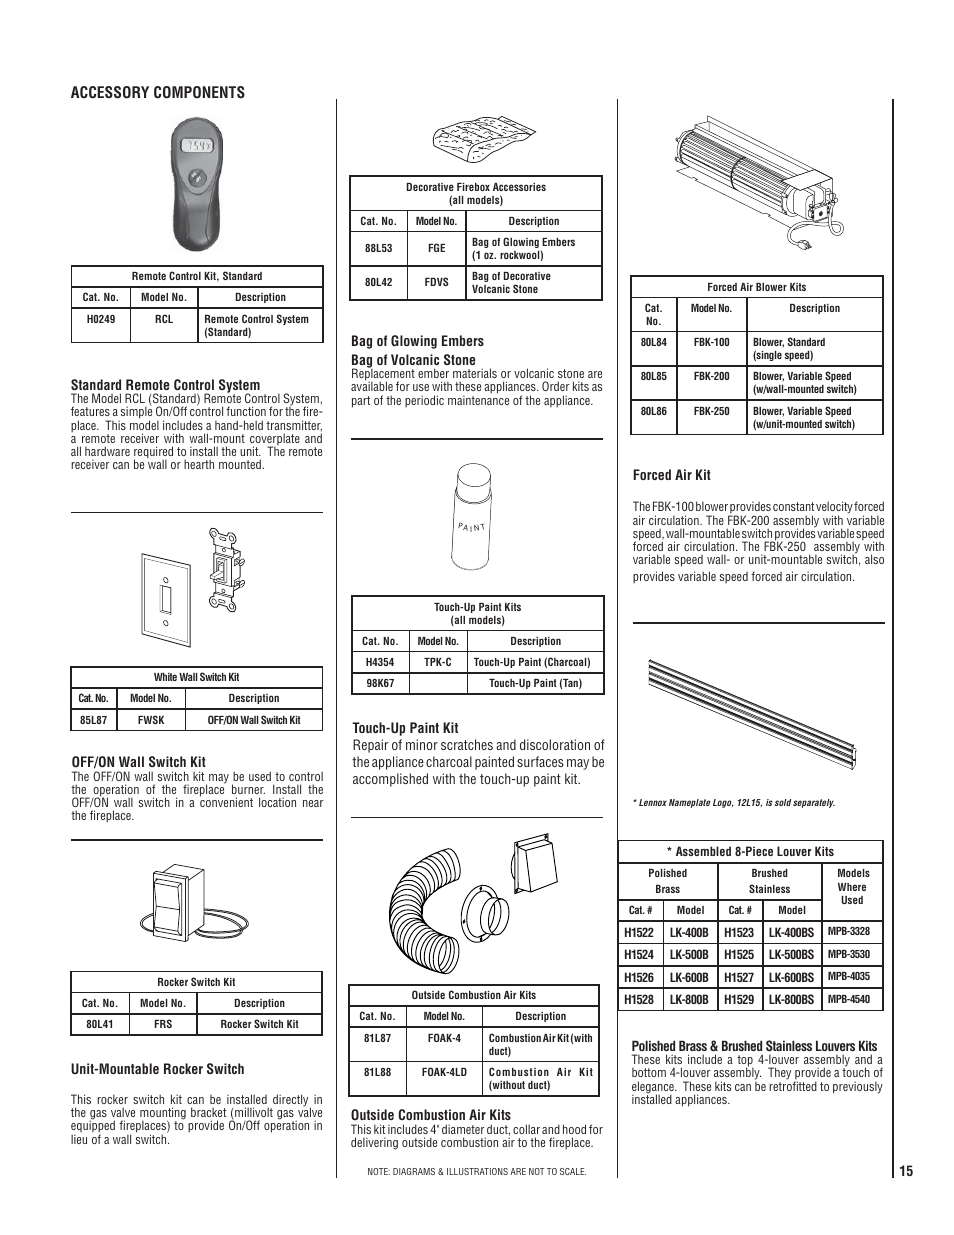 Accessory components | LG LENNOX MPB3328CNE User Manual | Page 15 / 28